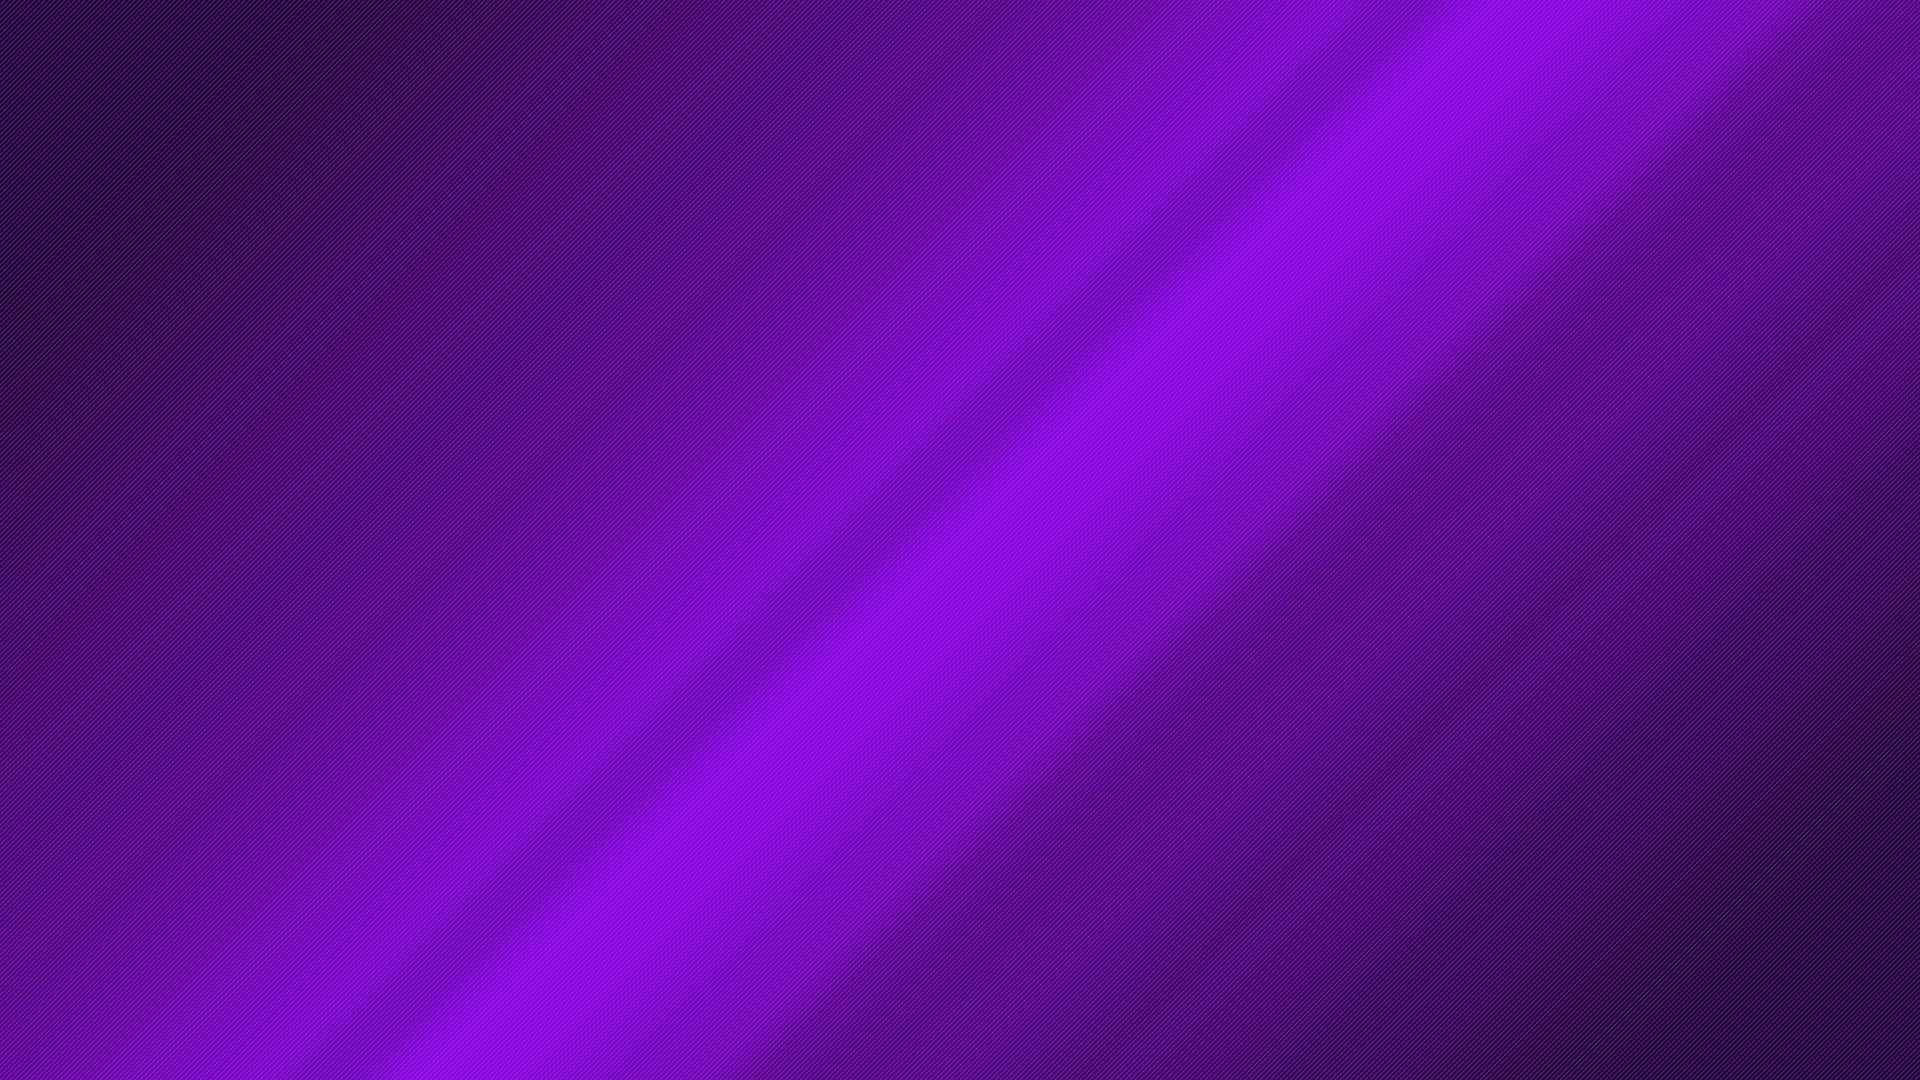 A royal dark purple hue among nature